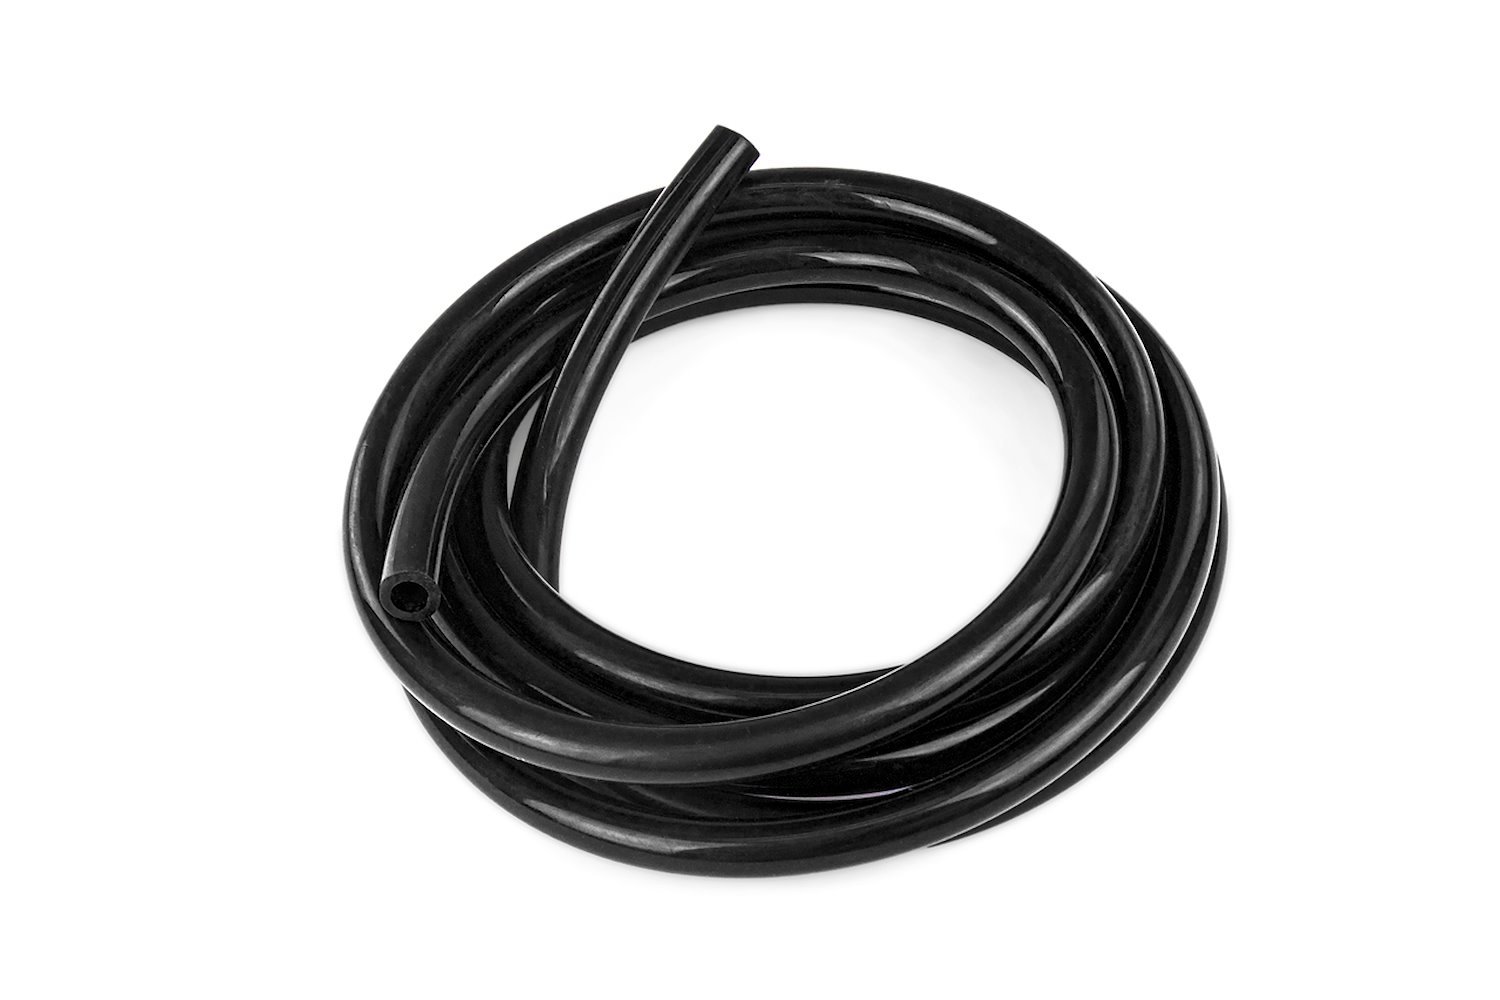 HTSVH3TW-BLKx10 High-Temperature Silicone Vacuum Hose Tubing, 1/8 in. ID, 10 ft. Roll, Black